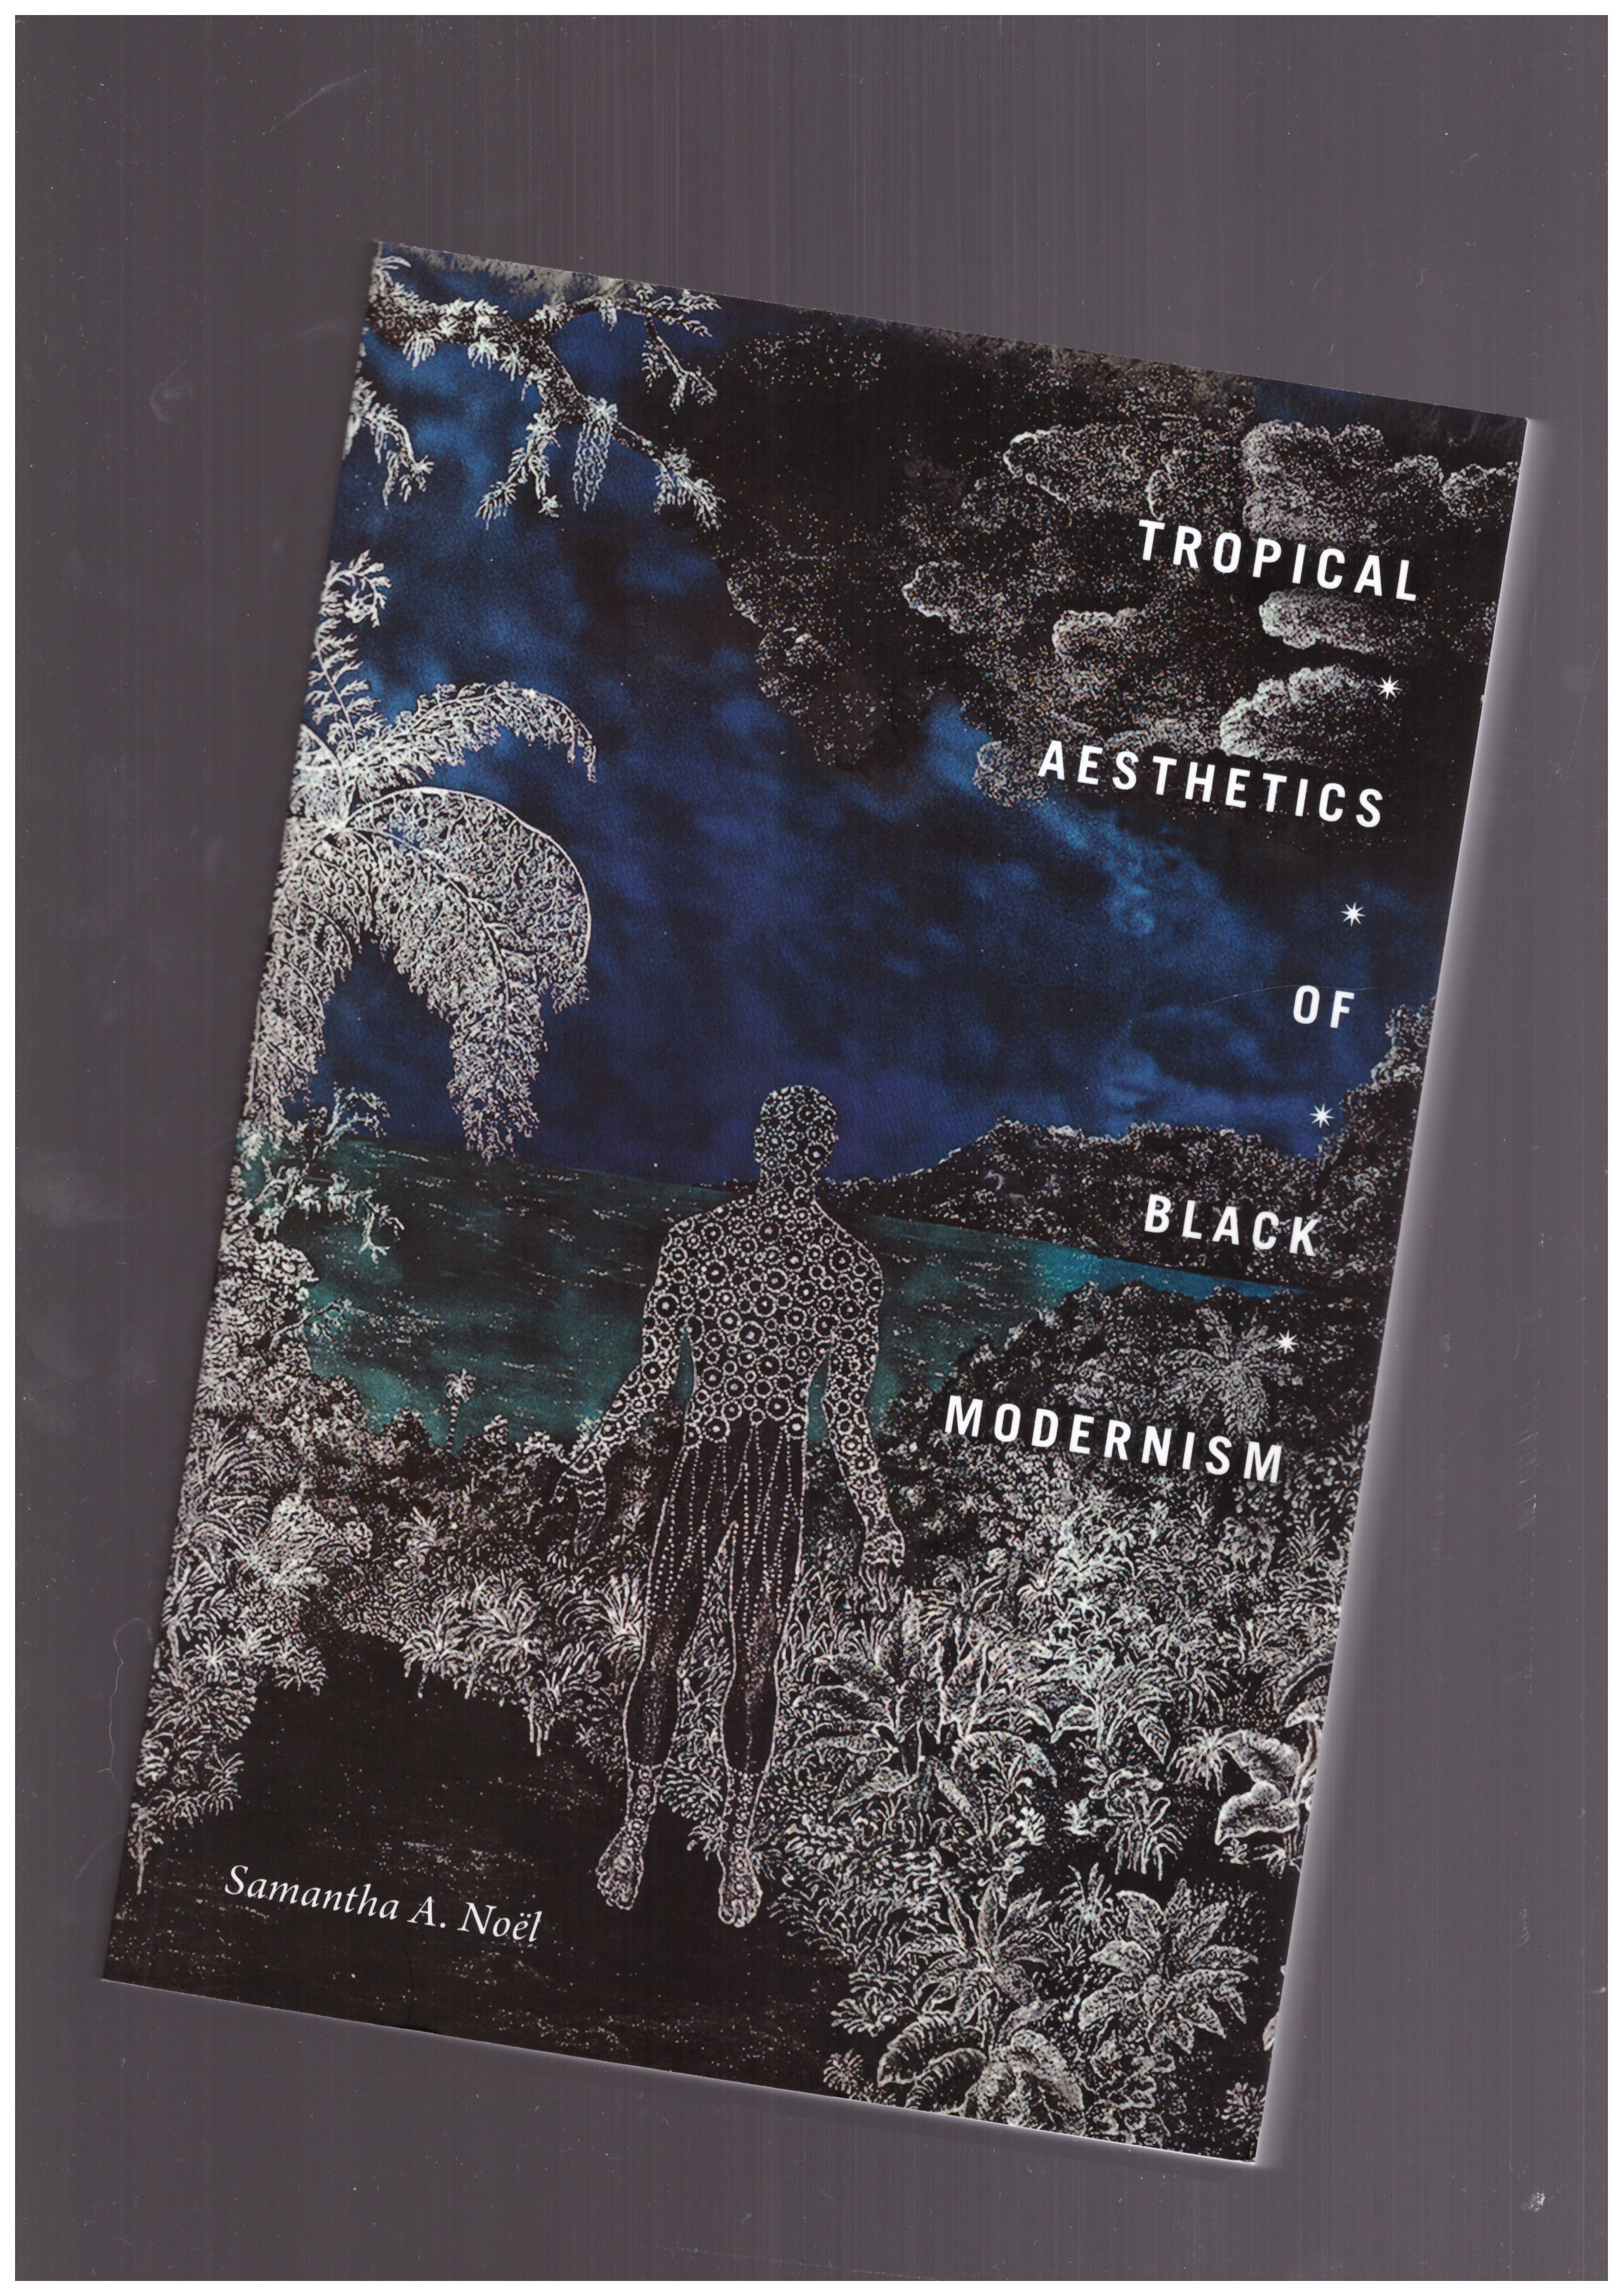 NOËL, Samantha A. - Tropical Aesthetic of black modernism